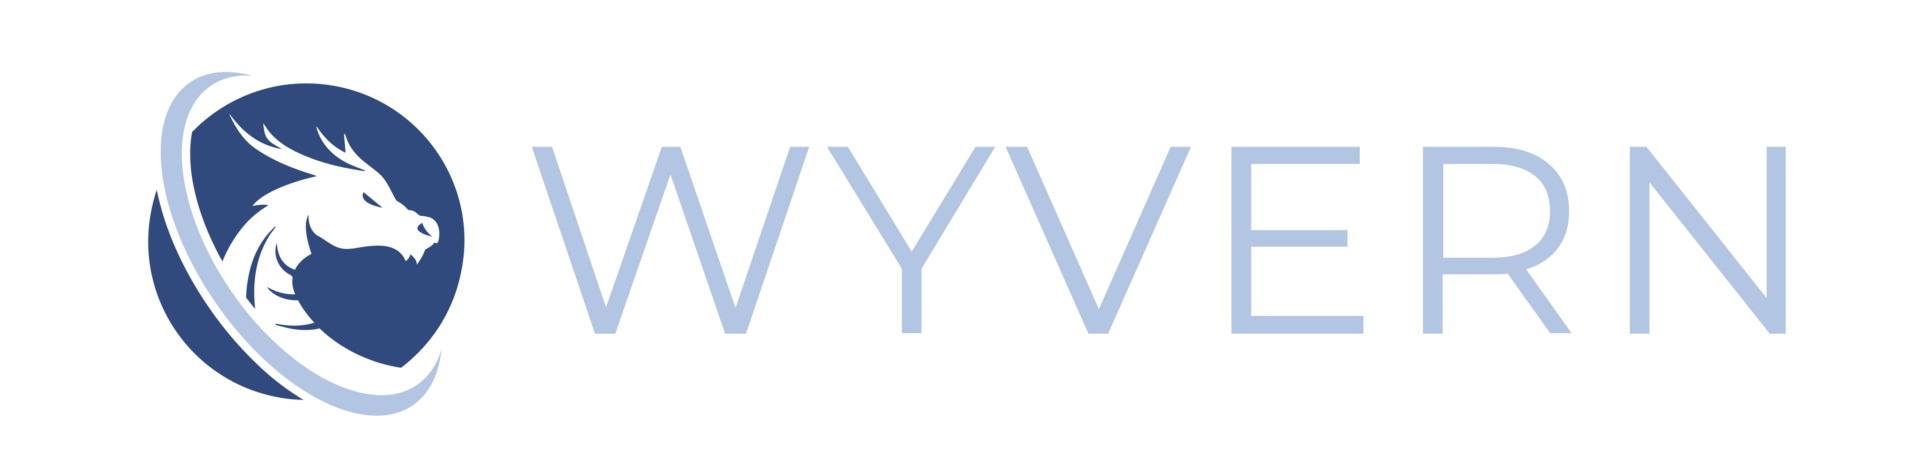 logo for Wyvern